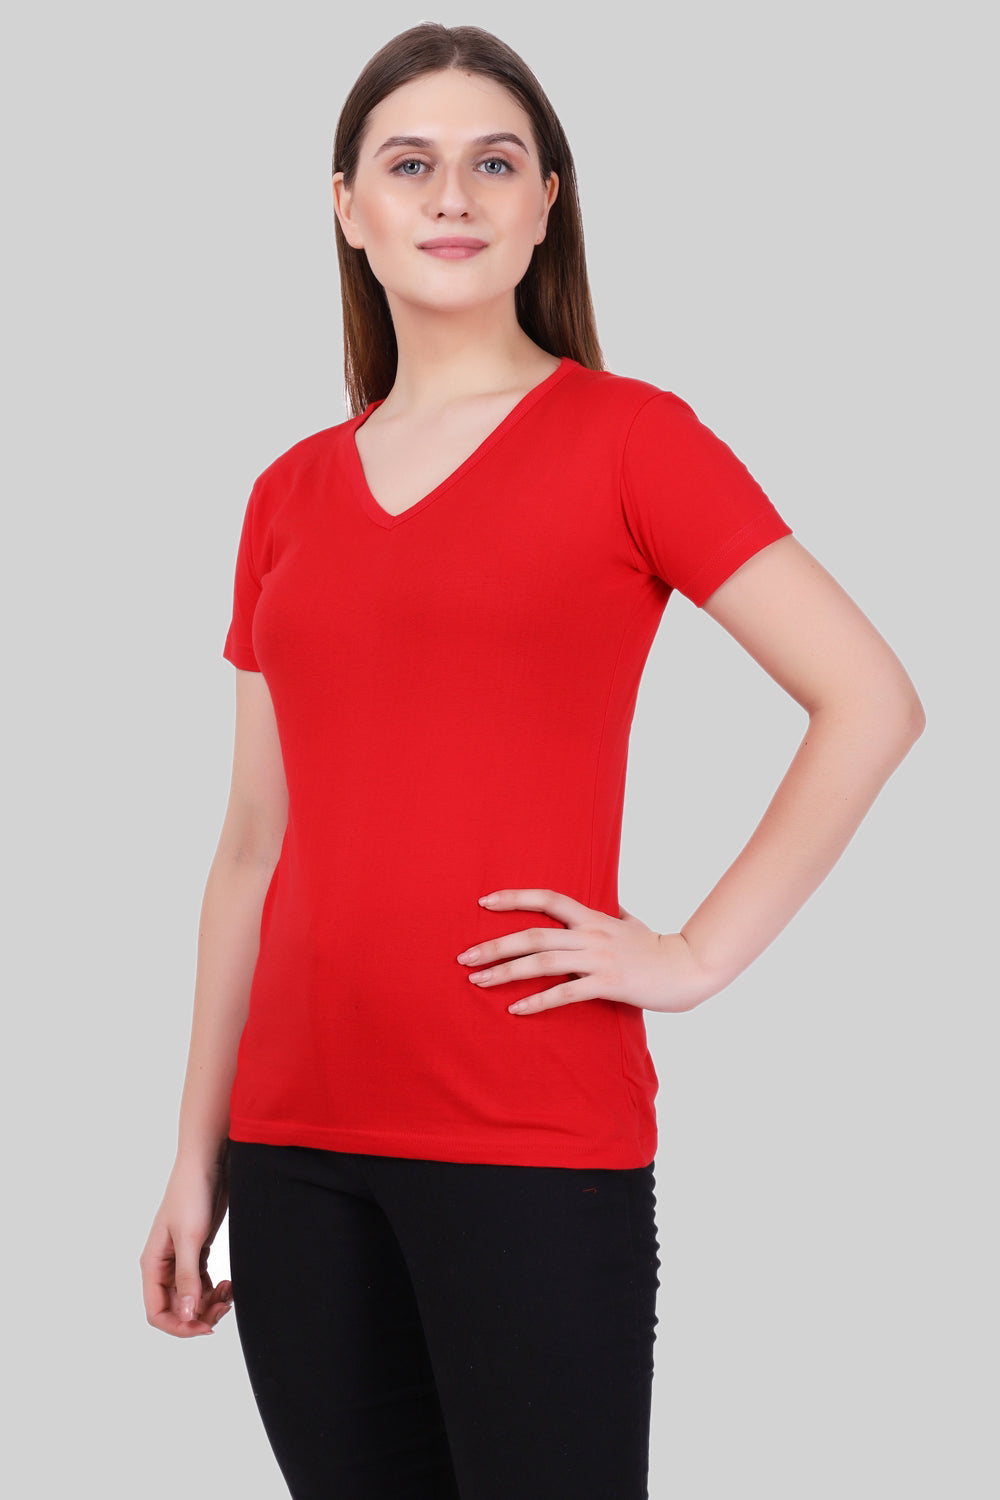 Women's Cotton Plain V Neck Half Sleeve Red Color T-Shirt